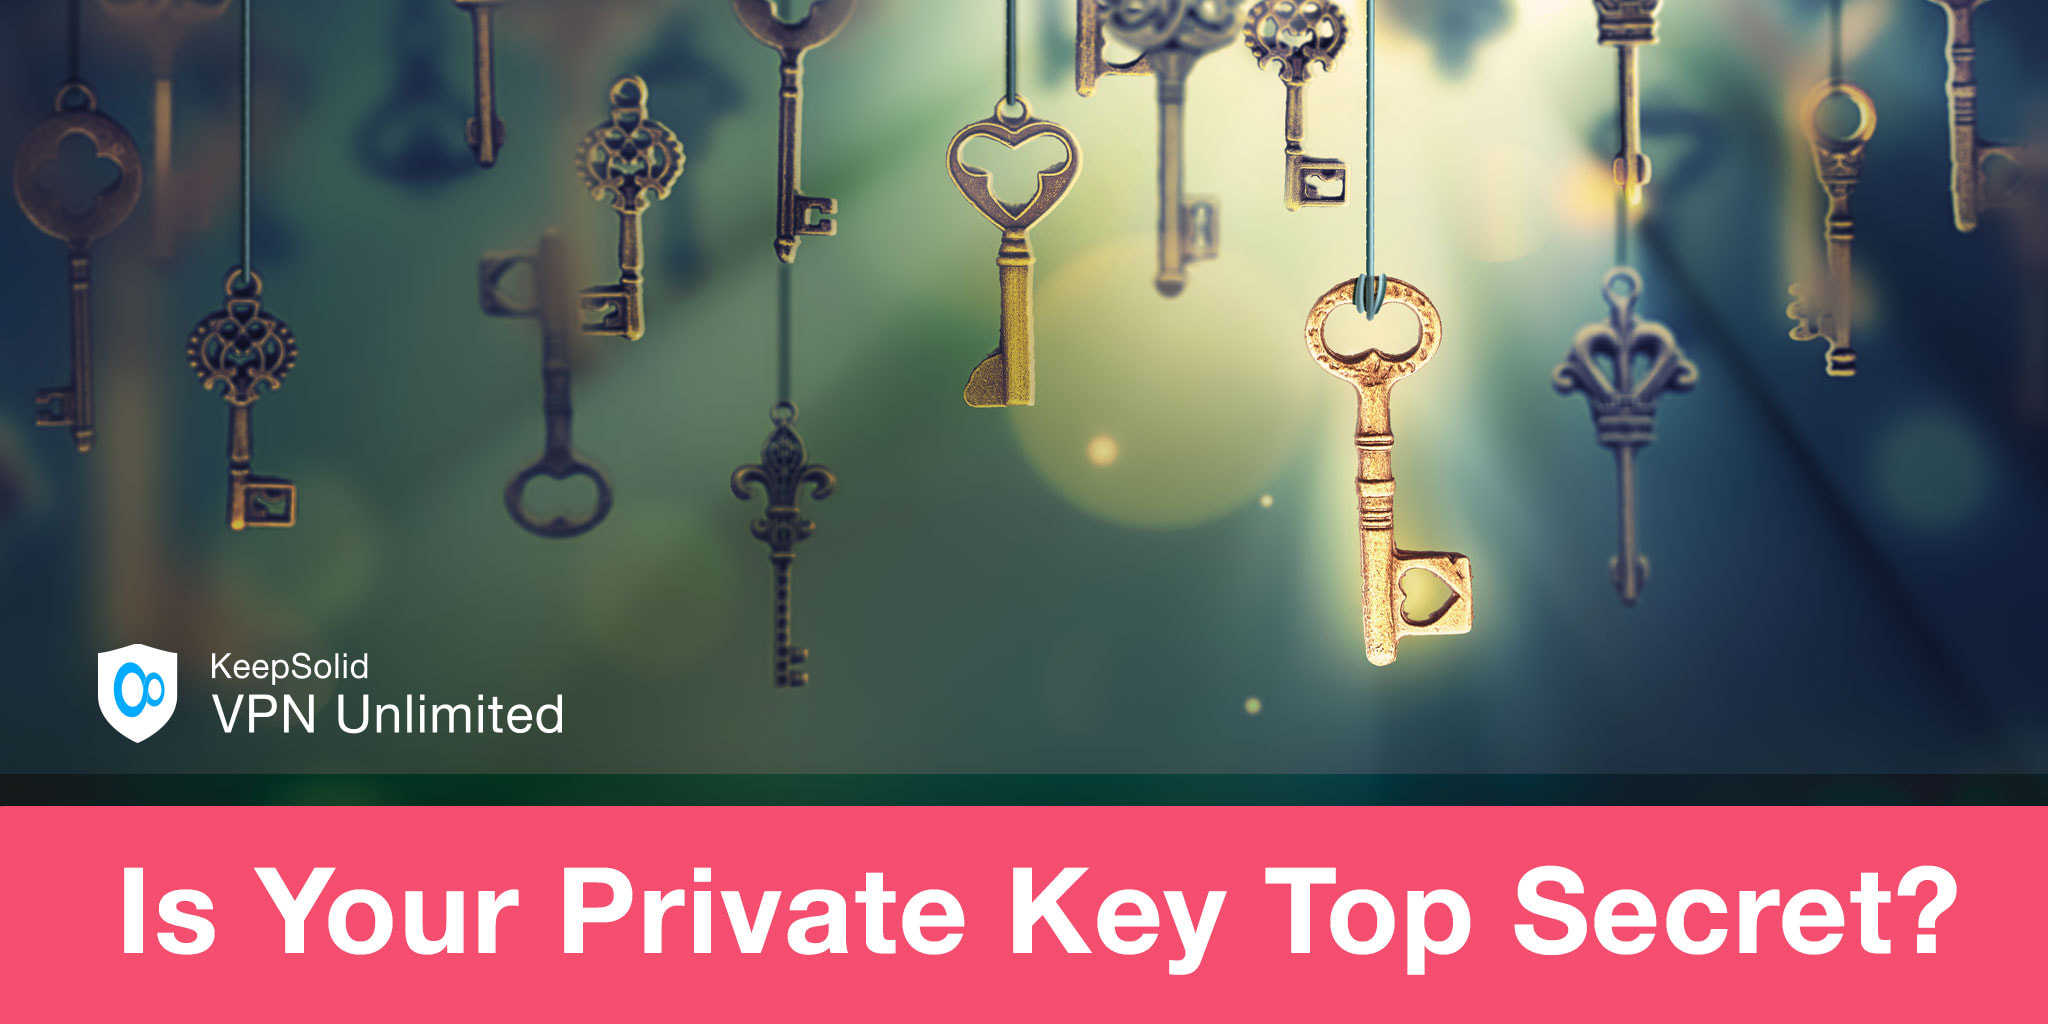 Keys denoting the private encryption key 